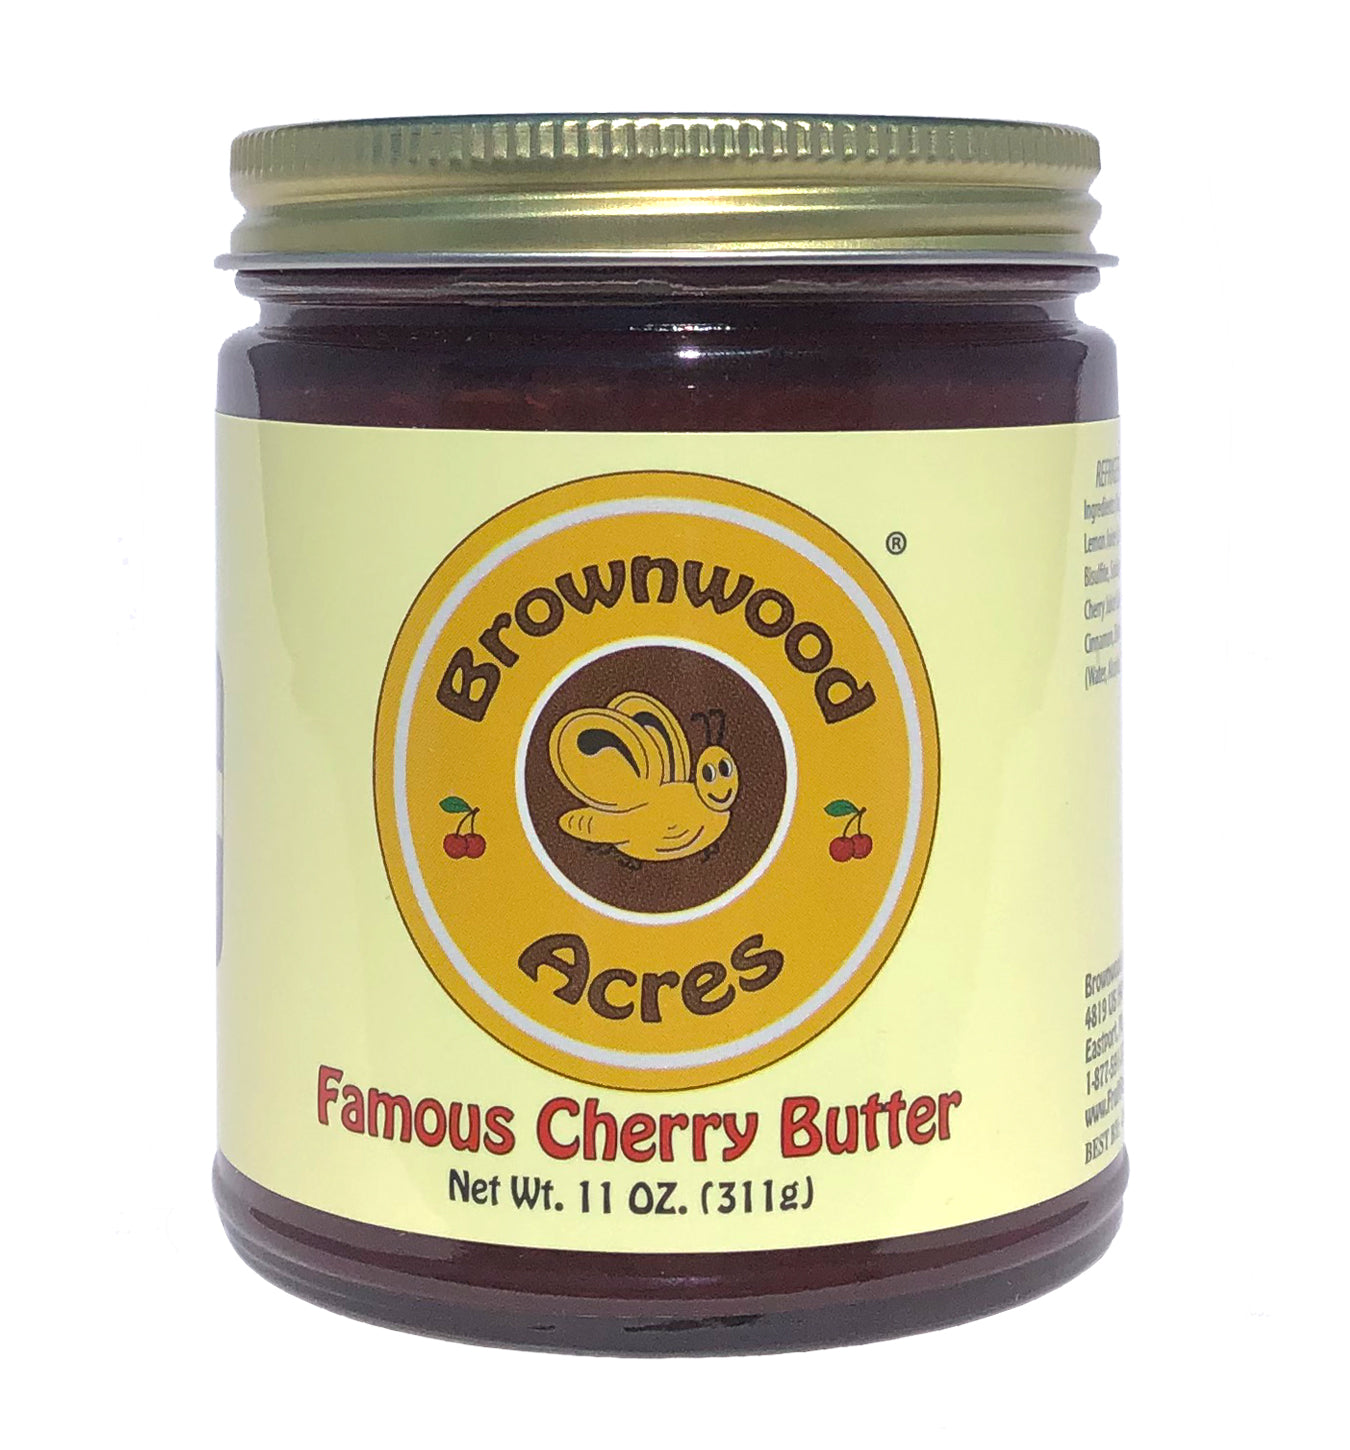 Famous Cherry Butter